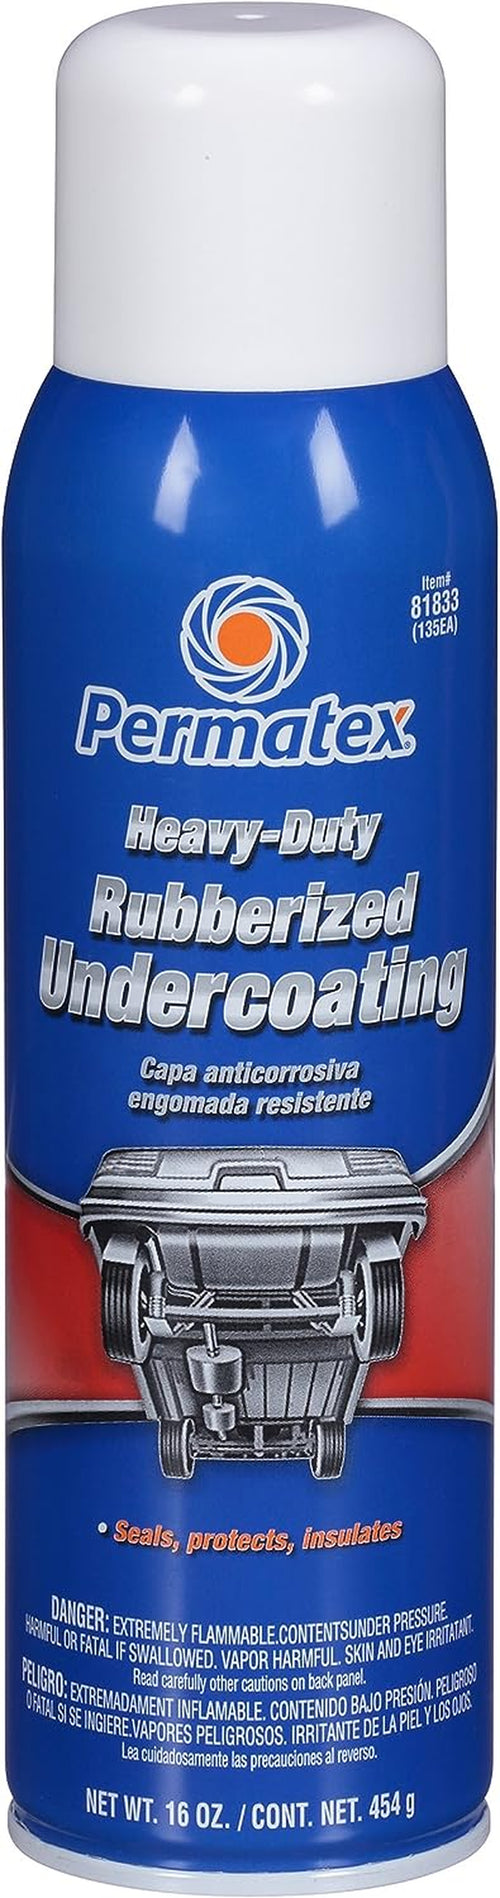 Permatex 81833-12PK Heavy Duty Rubberized Undercoating, 16 Oz. Aerosol Can (Pack of 12)